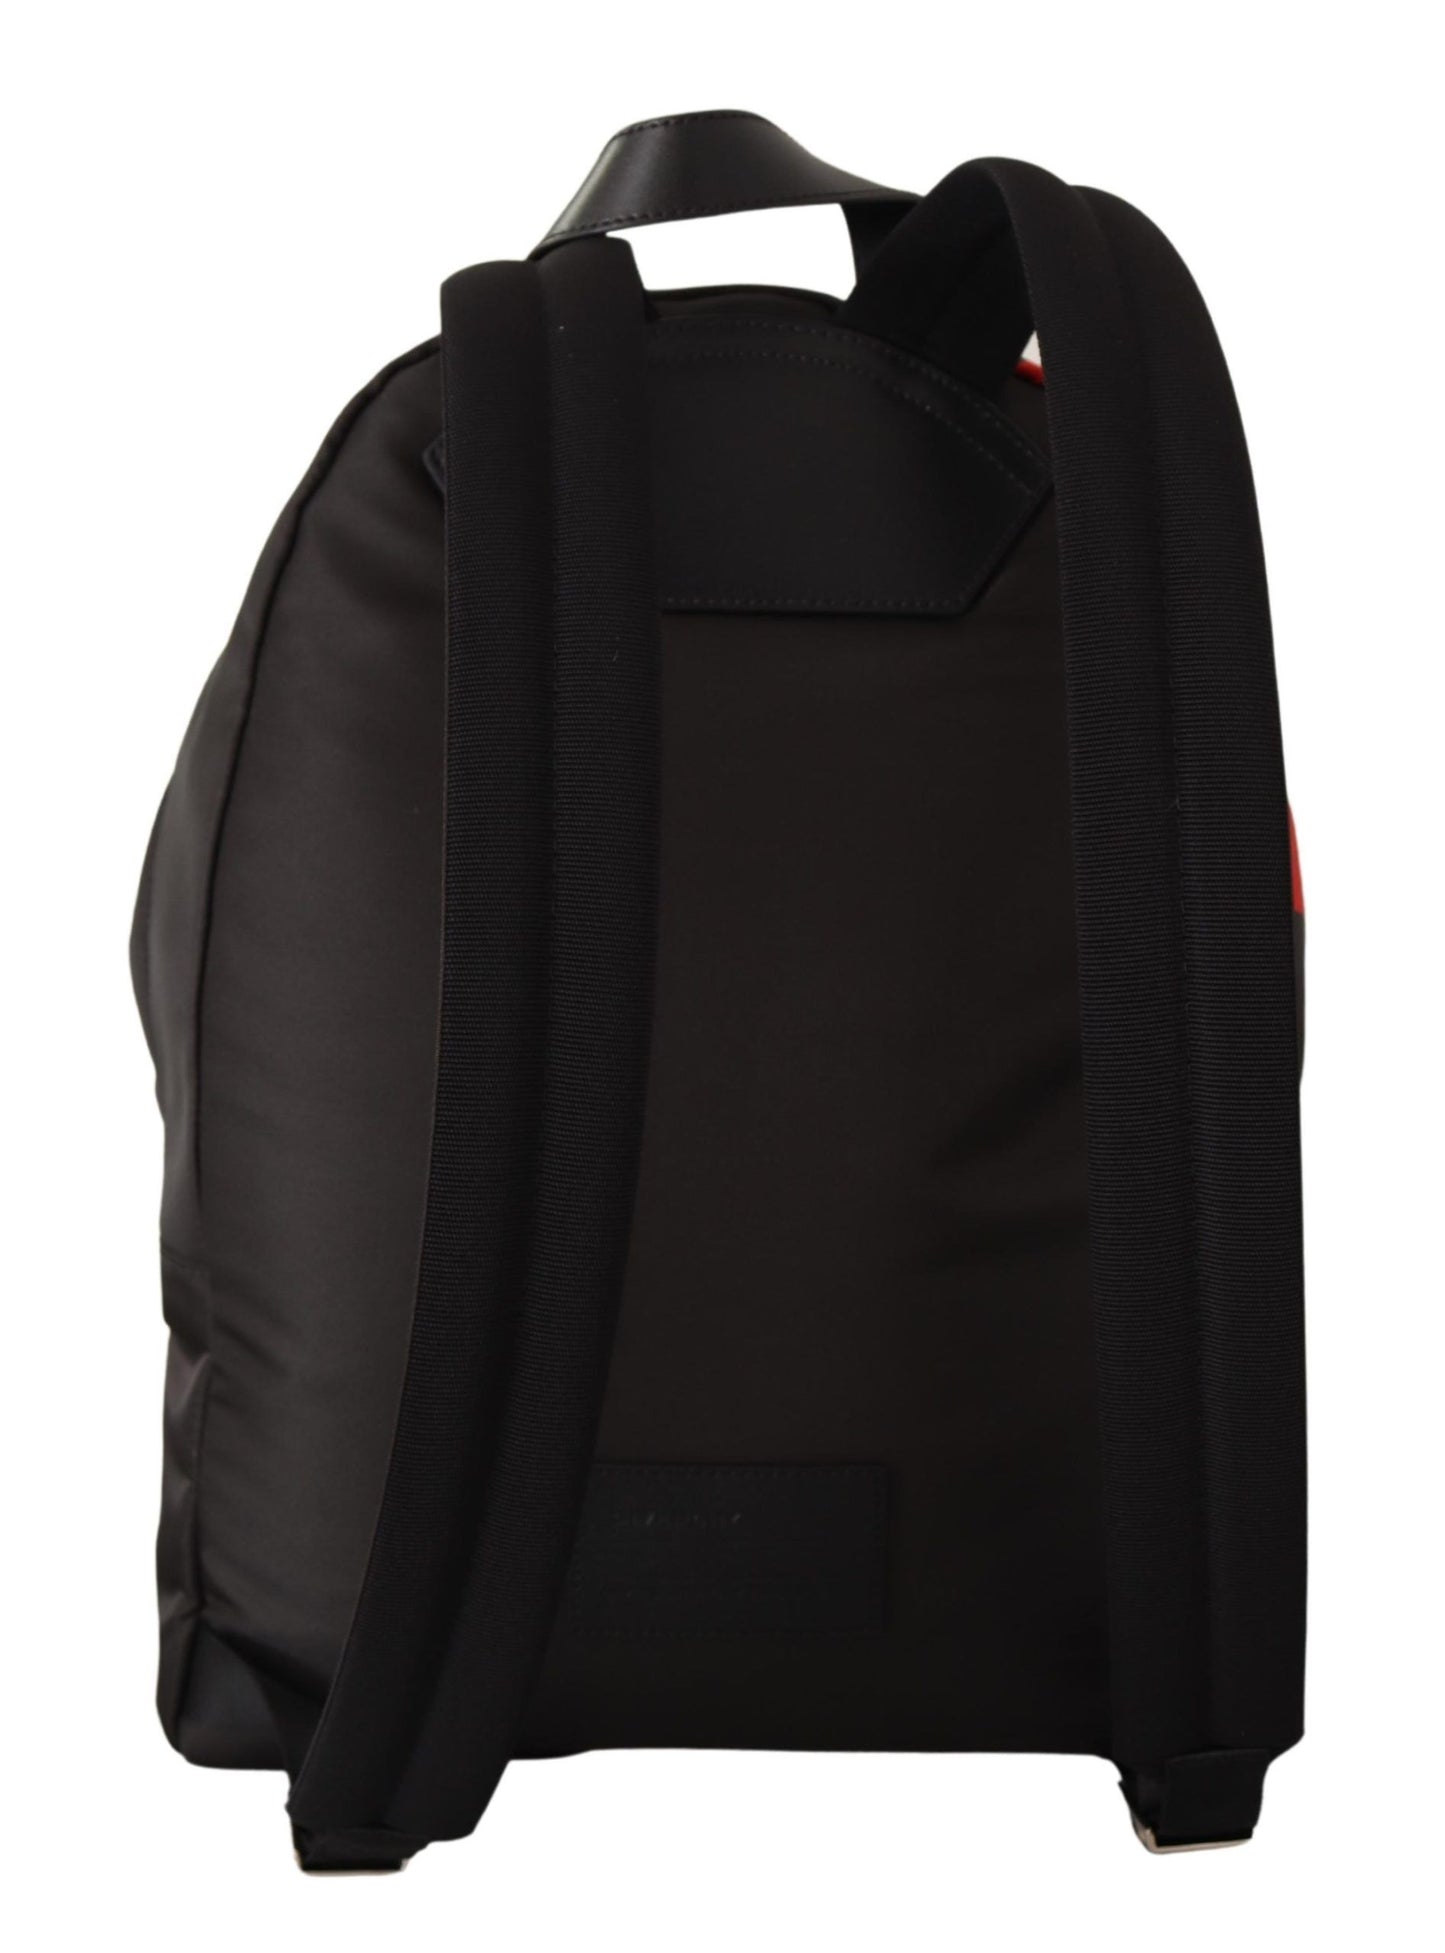 Givenchy Men's Red & Black Nylon Urban Backpack